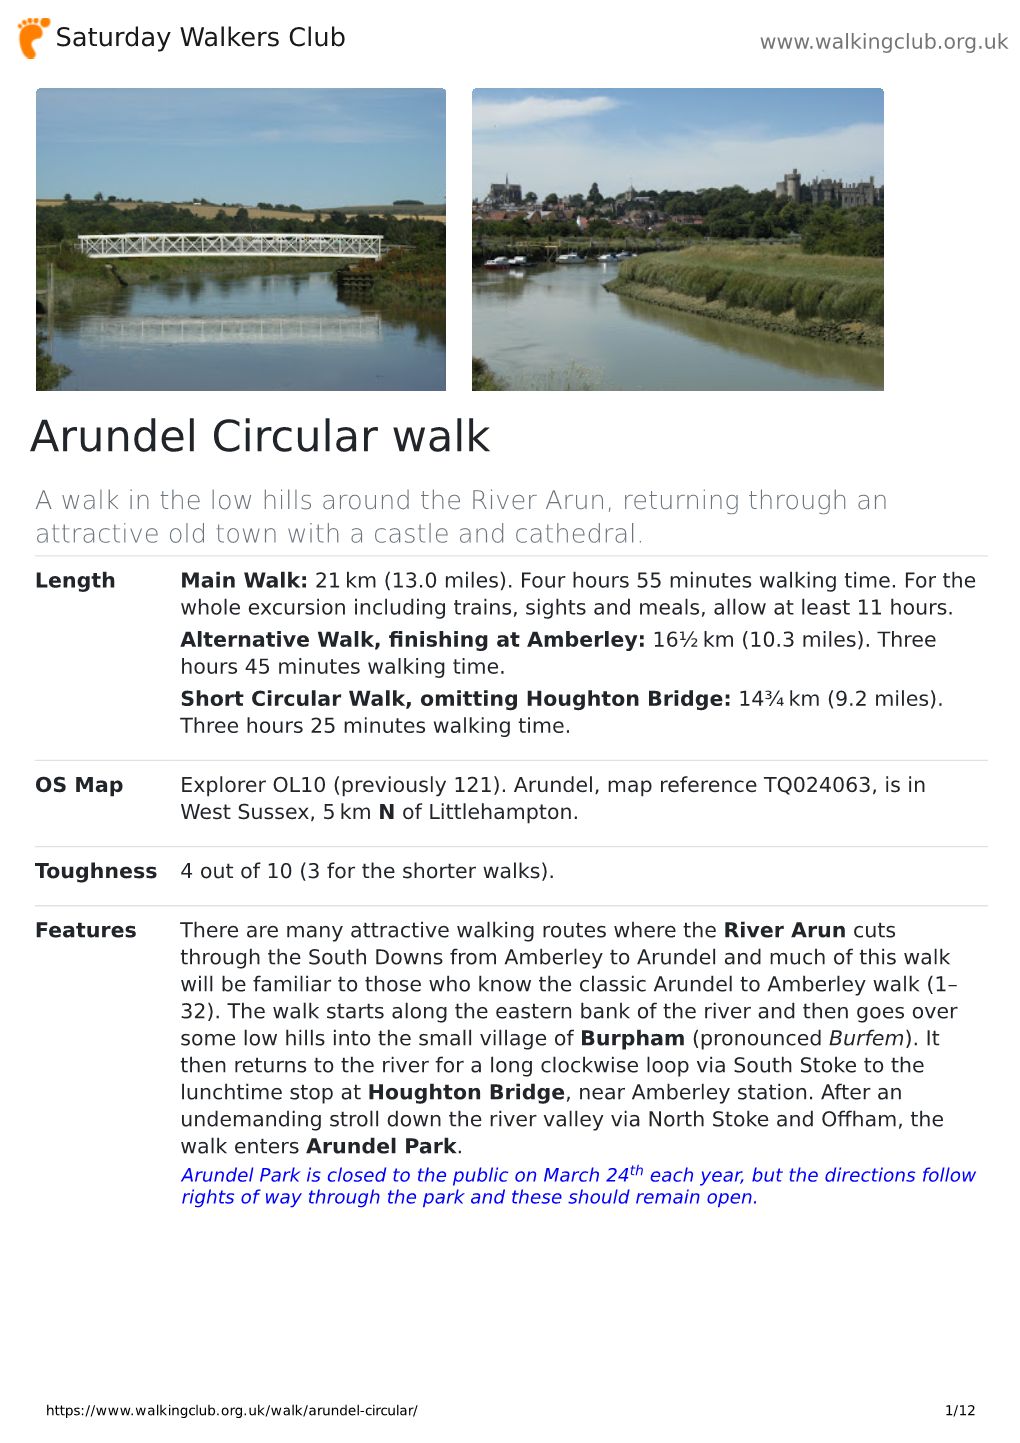 Arundel Circular Walk